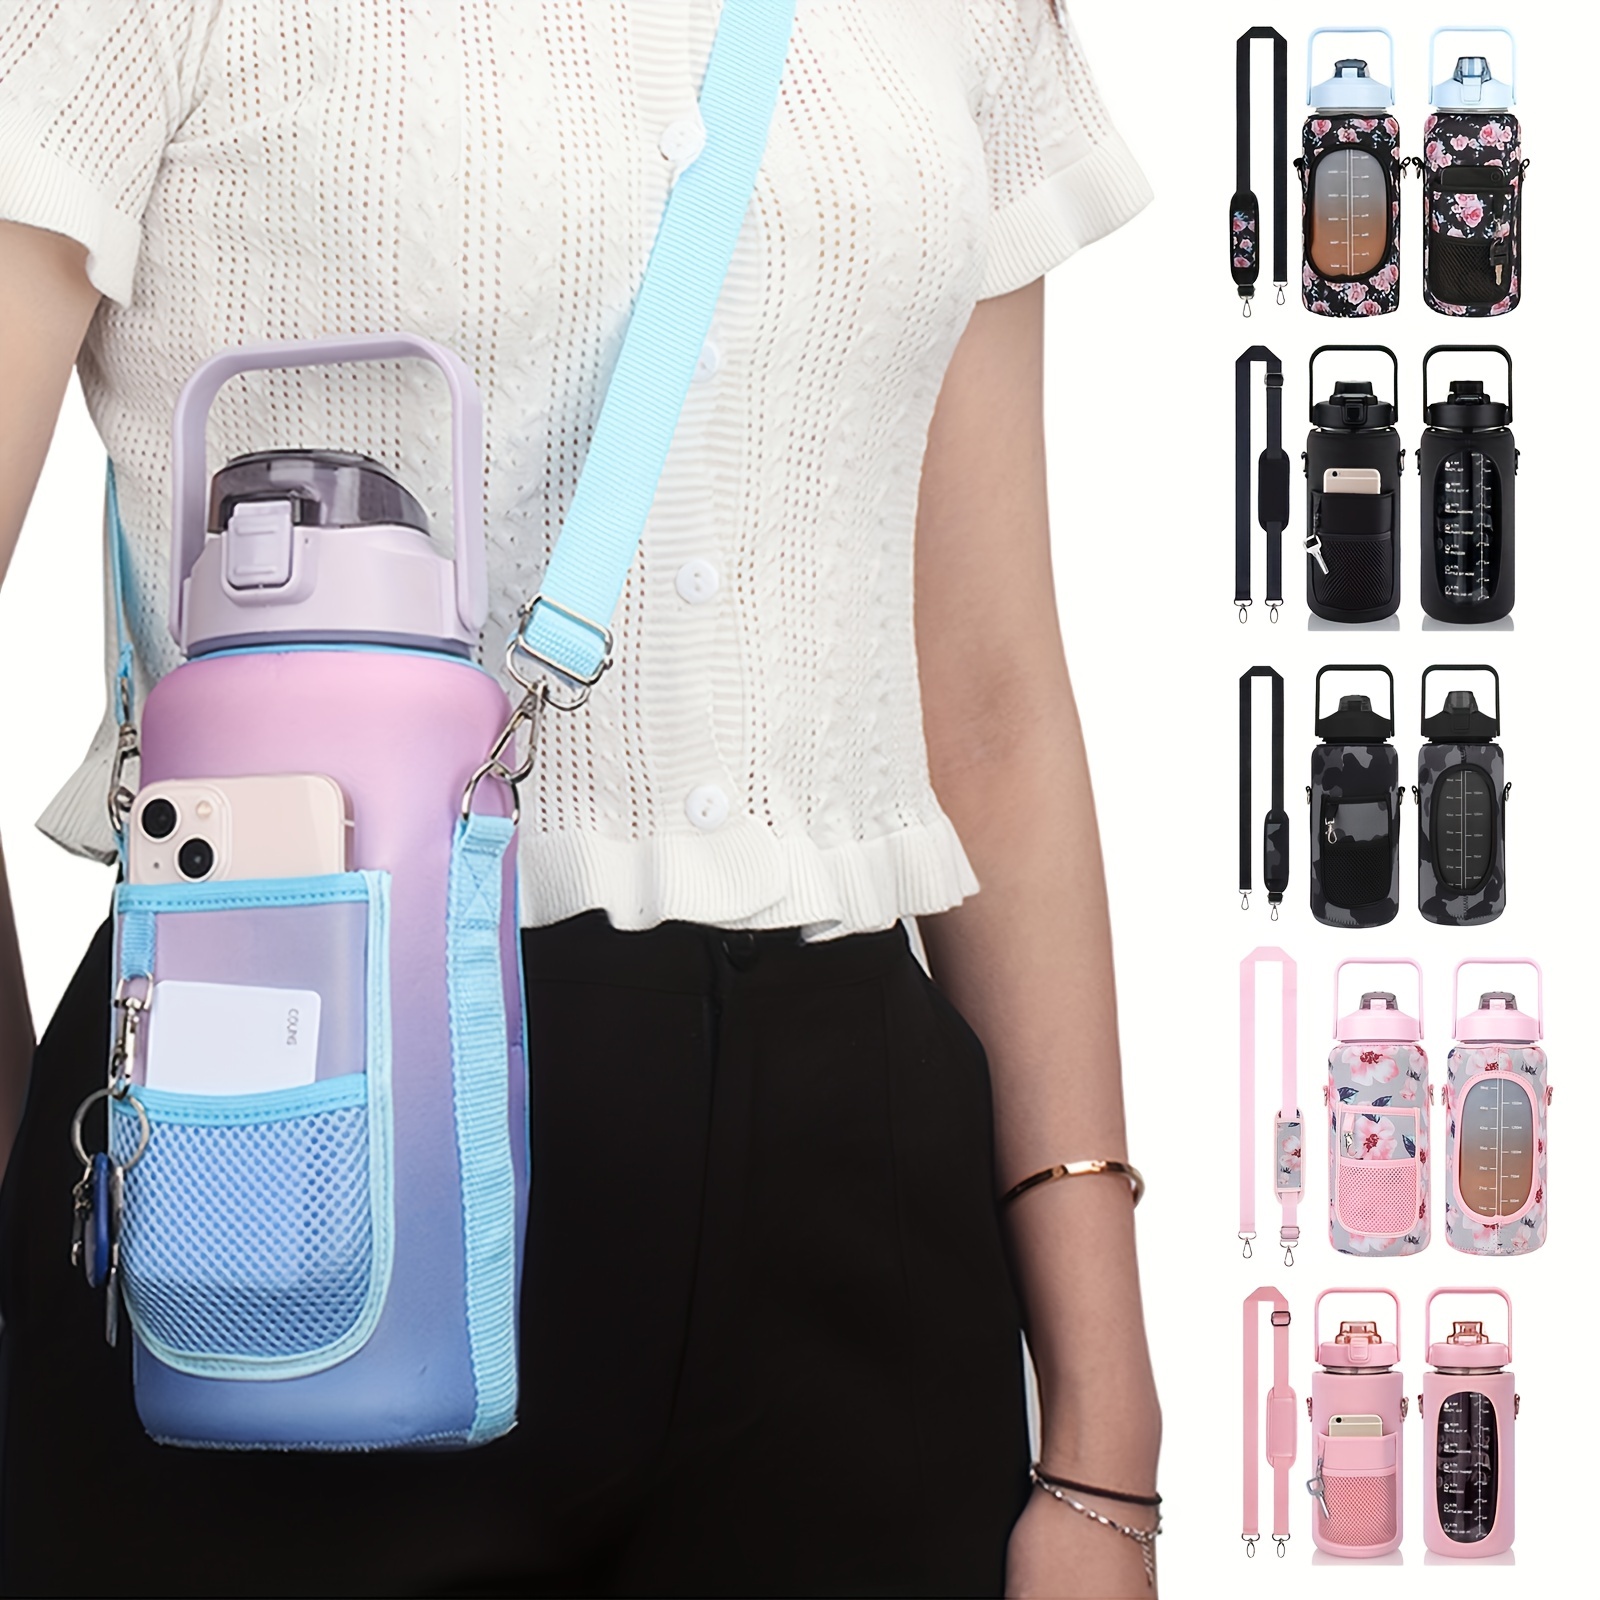 500ml Water Bottle Sleeve Cover Insulated Waterproof Neoprene Bottle Holder Carrier with Buckle Handle Black